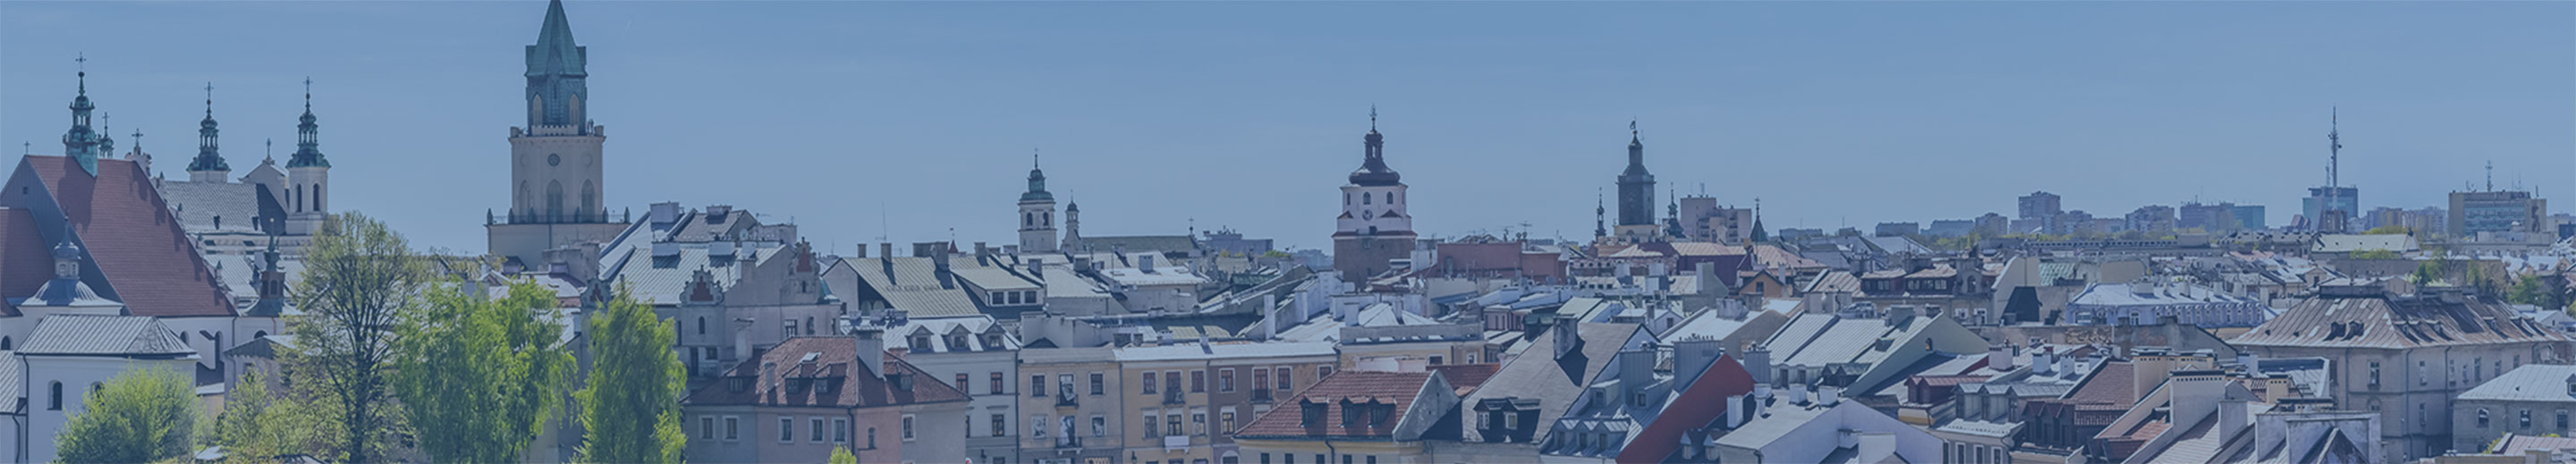 Lublin - panorama